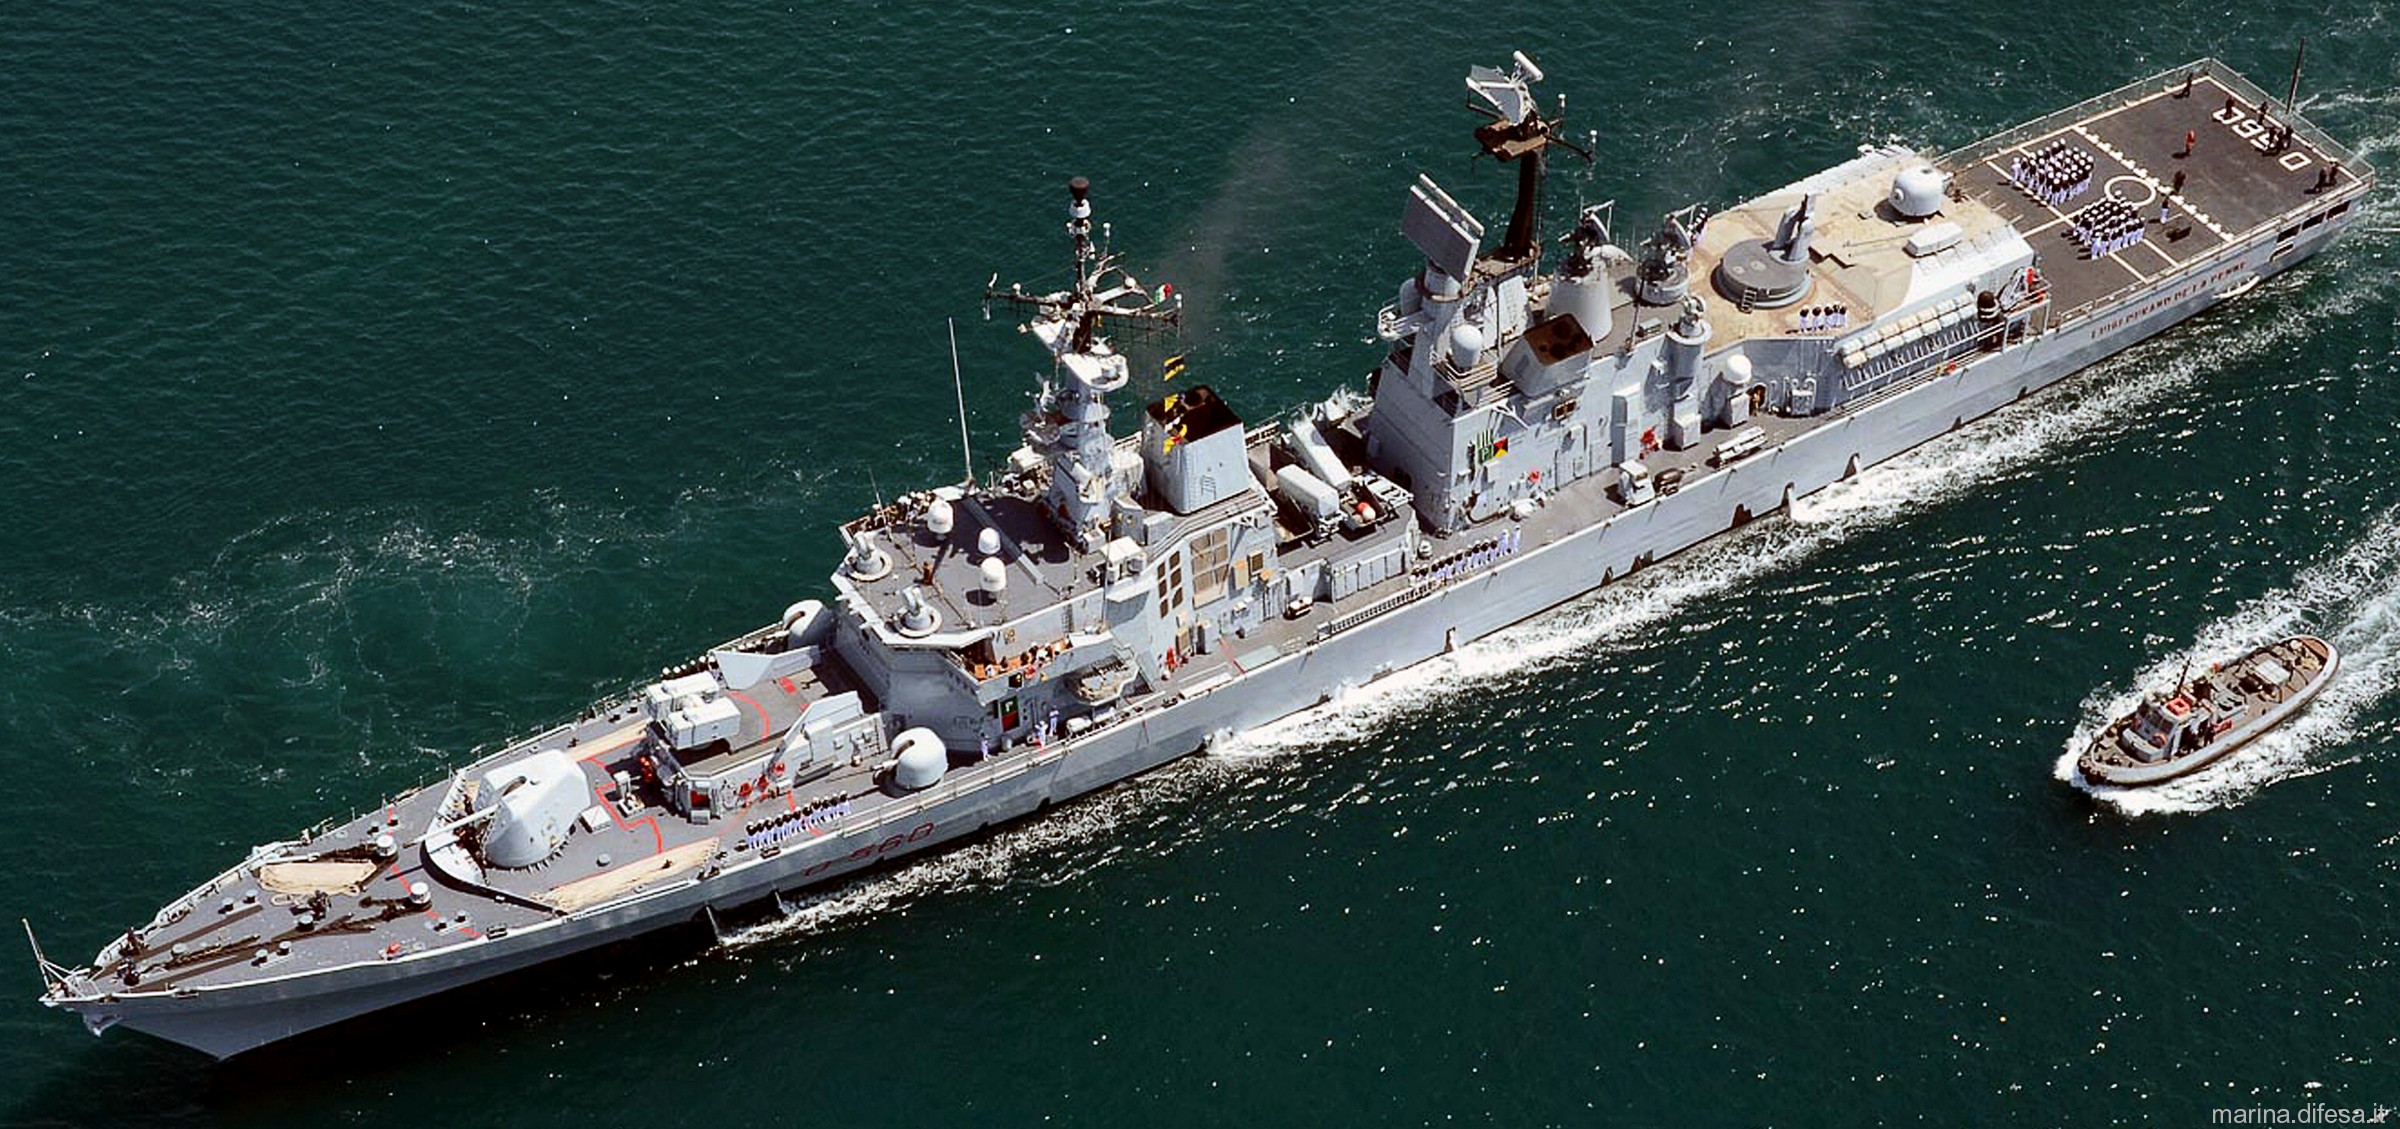 d-560 luigi durand de la penne its nave guided missile destroyer ddg italian navy marina militare 13